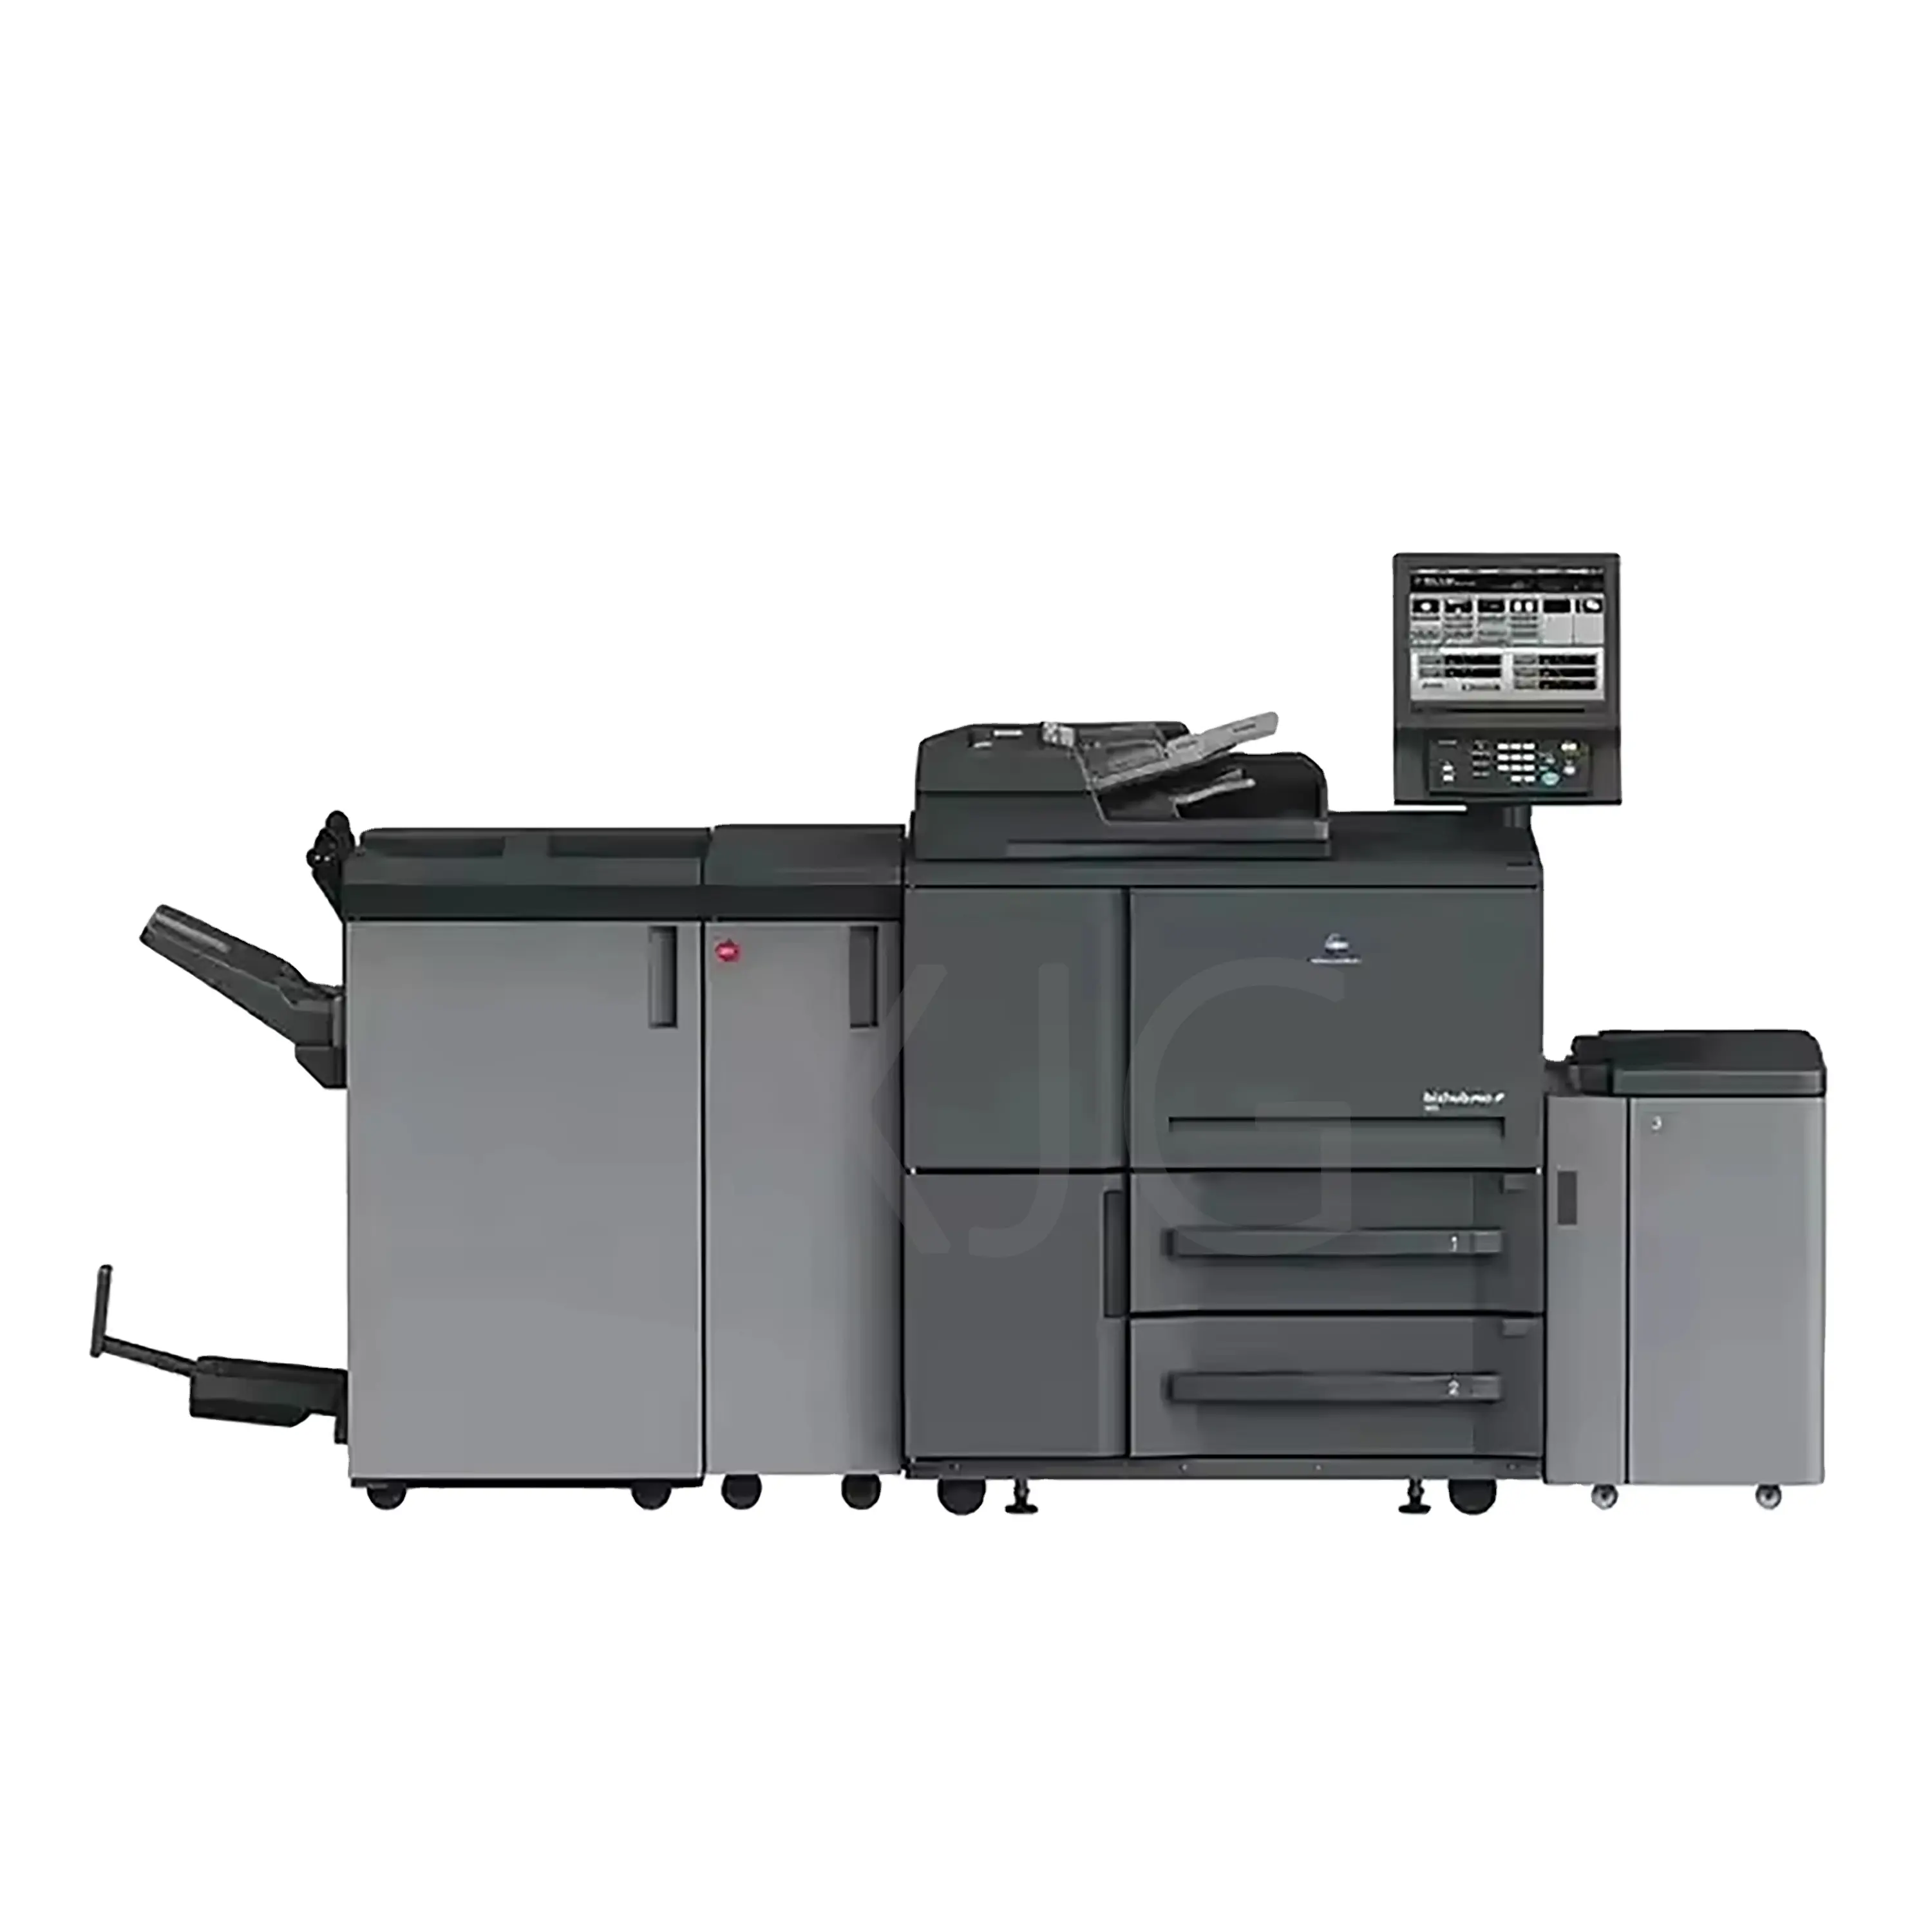 Konica Minolta 1100 Black Copiers Bizhub Press Pro 951 1250 1100 c1085 c7000 1070 2070 monochromatic Photocopier Machine